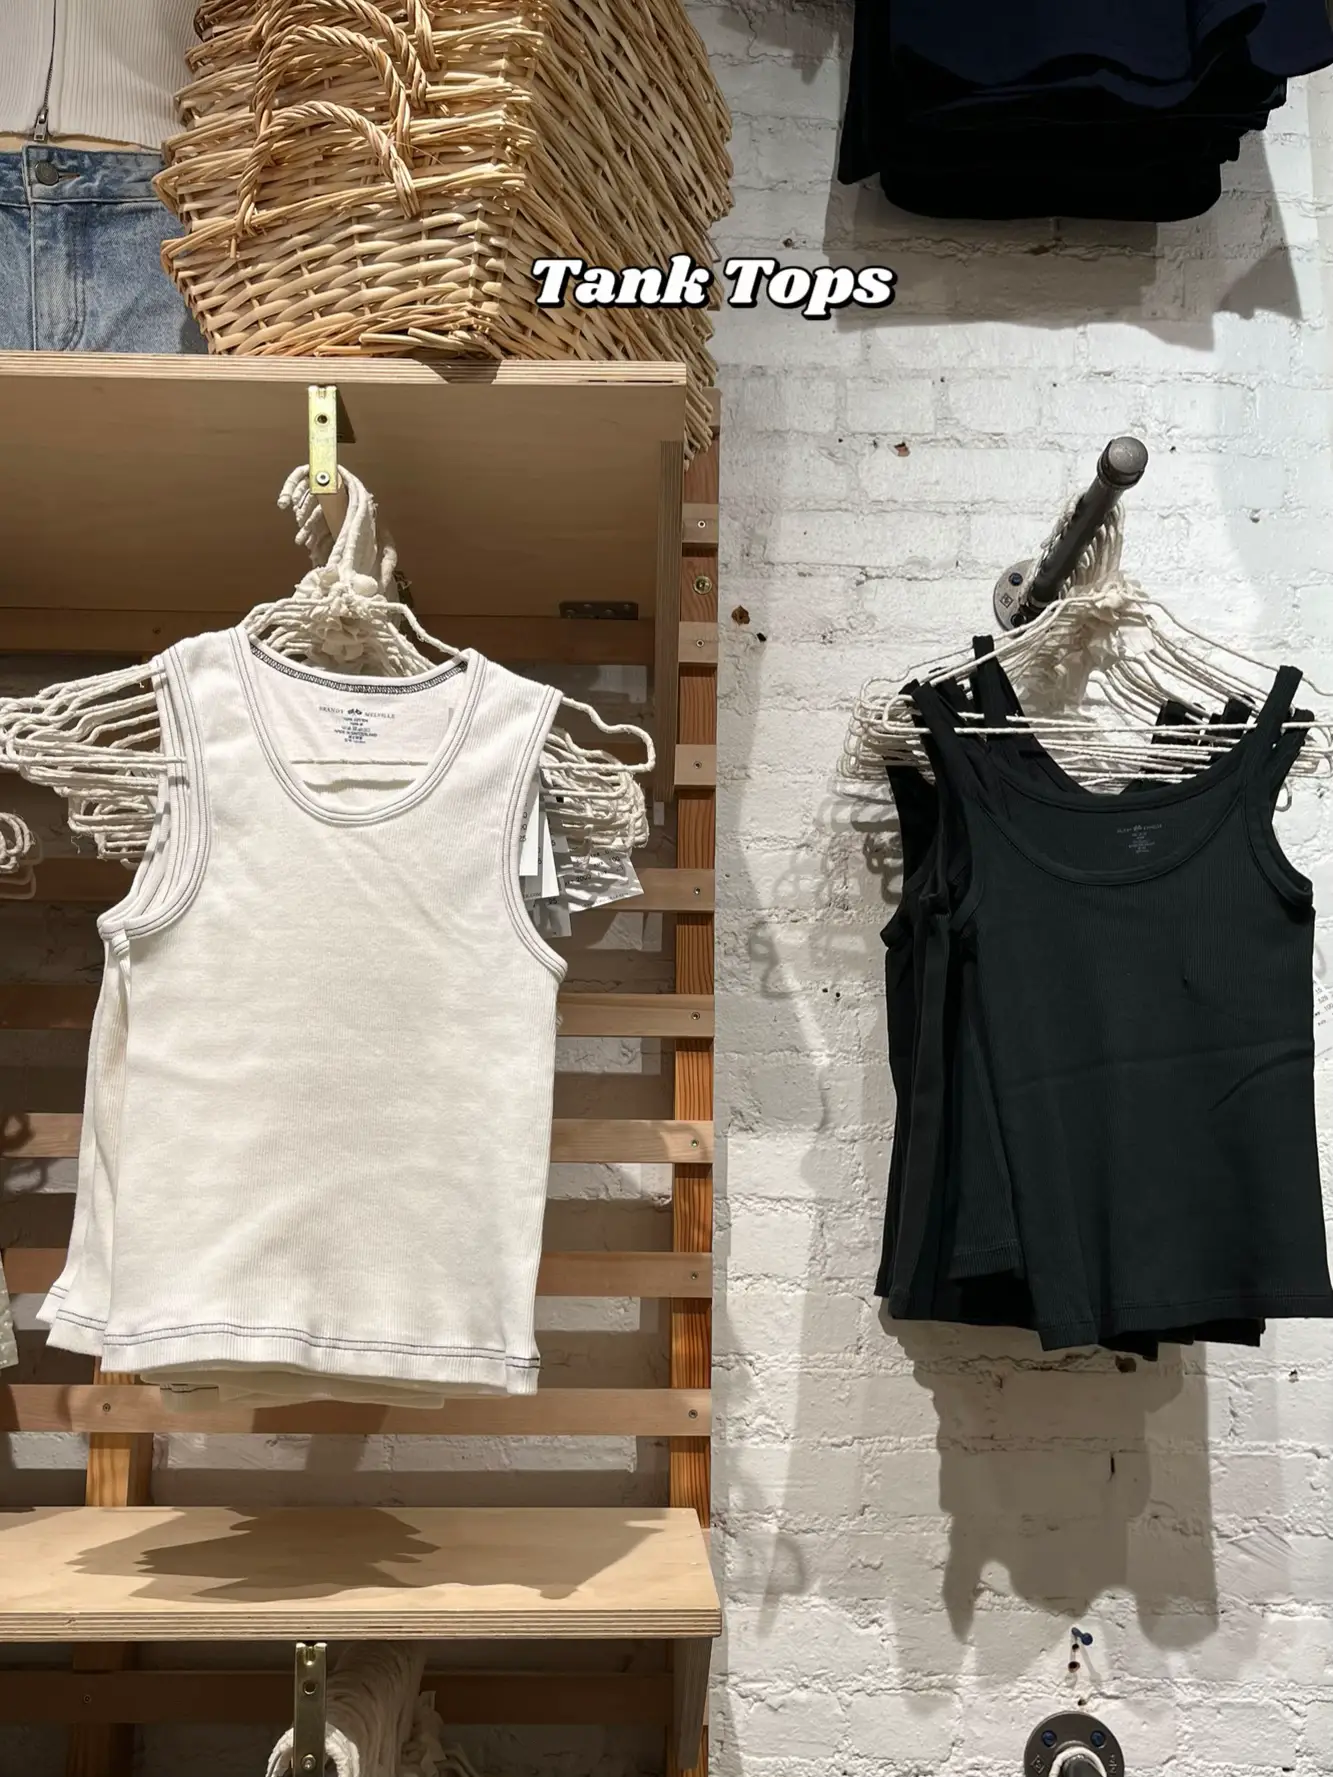 Brandy Melville - conor tank on Designer Wardrobe